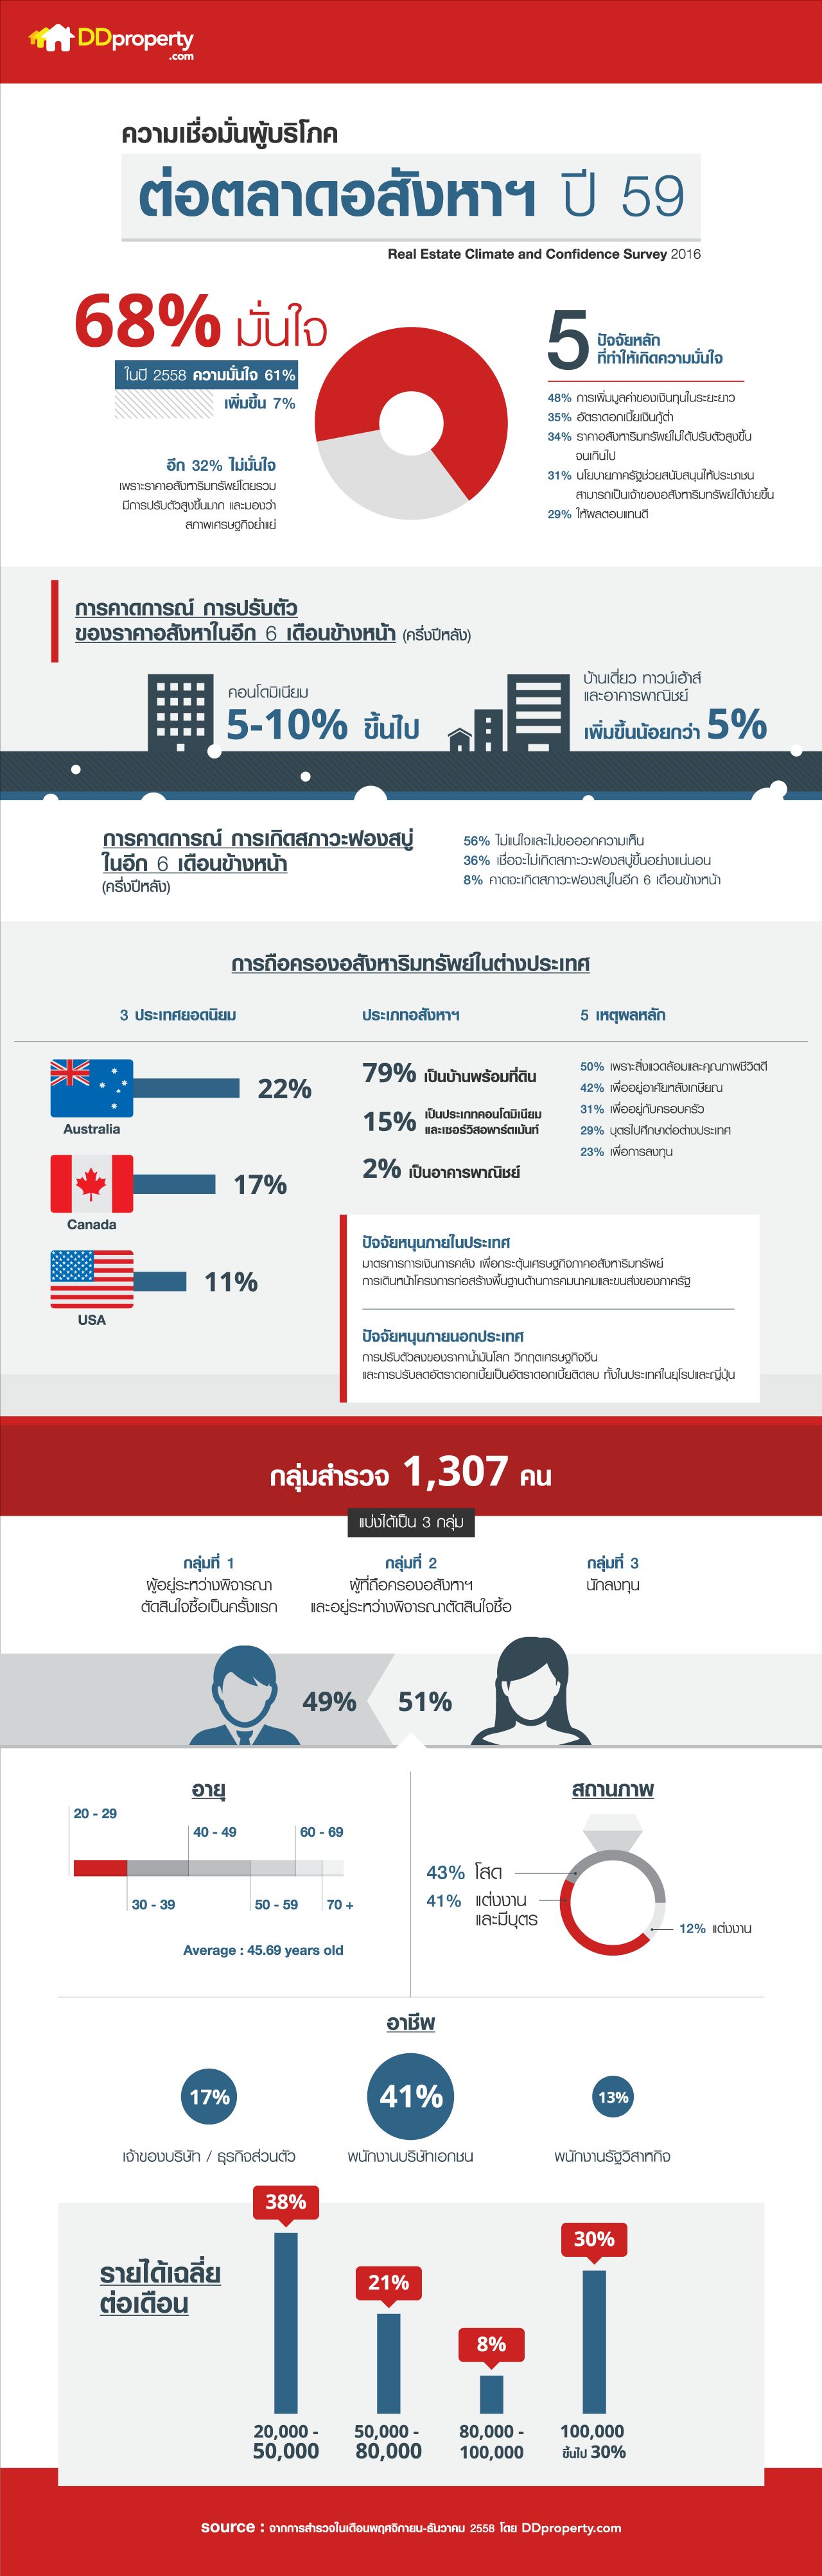 Confidence-Survey-infographic-1